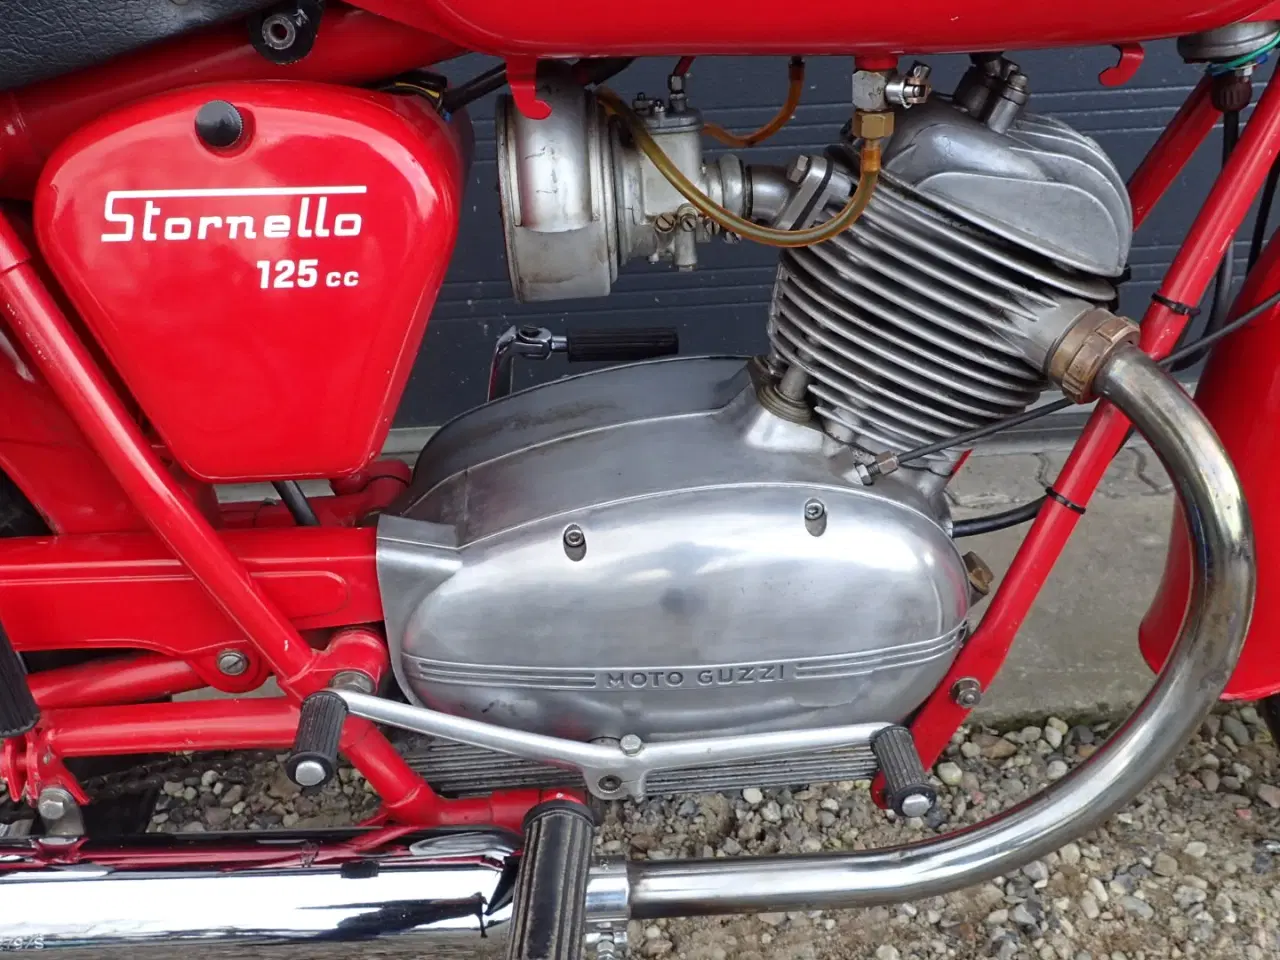 Billede 4 - Moto Guzzi 125 4T Stornello Turismo årg 1963